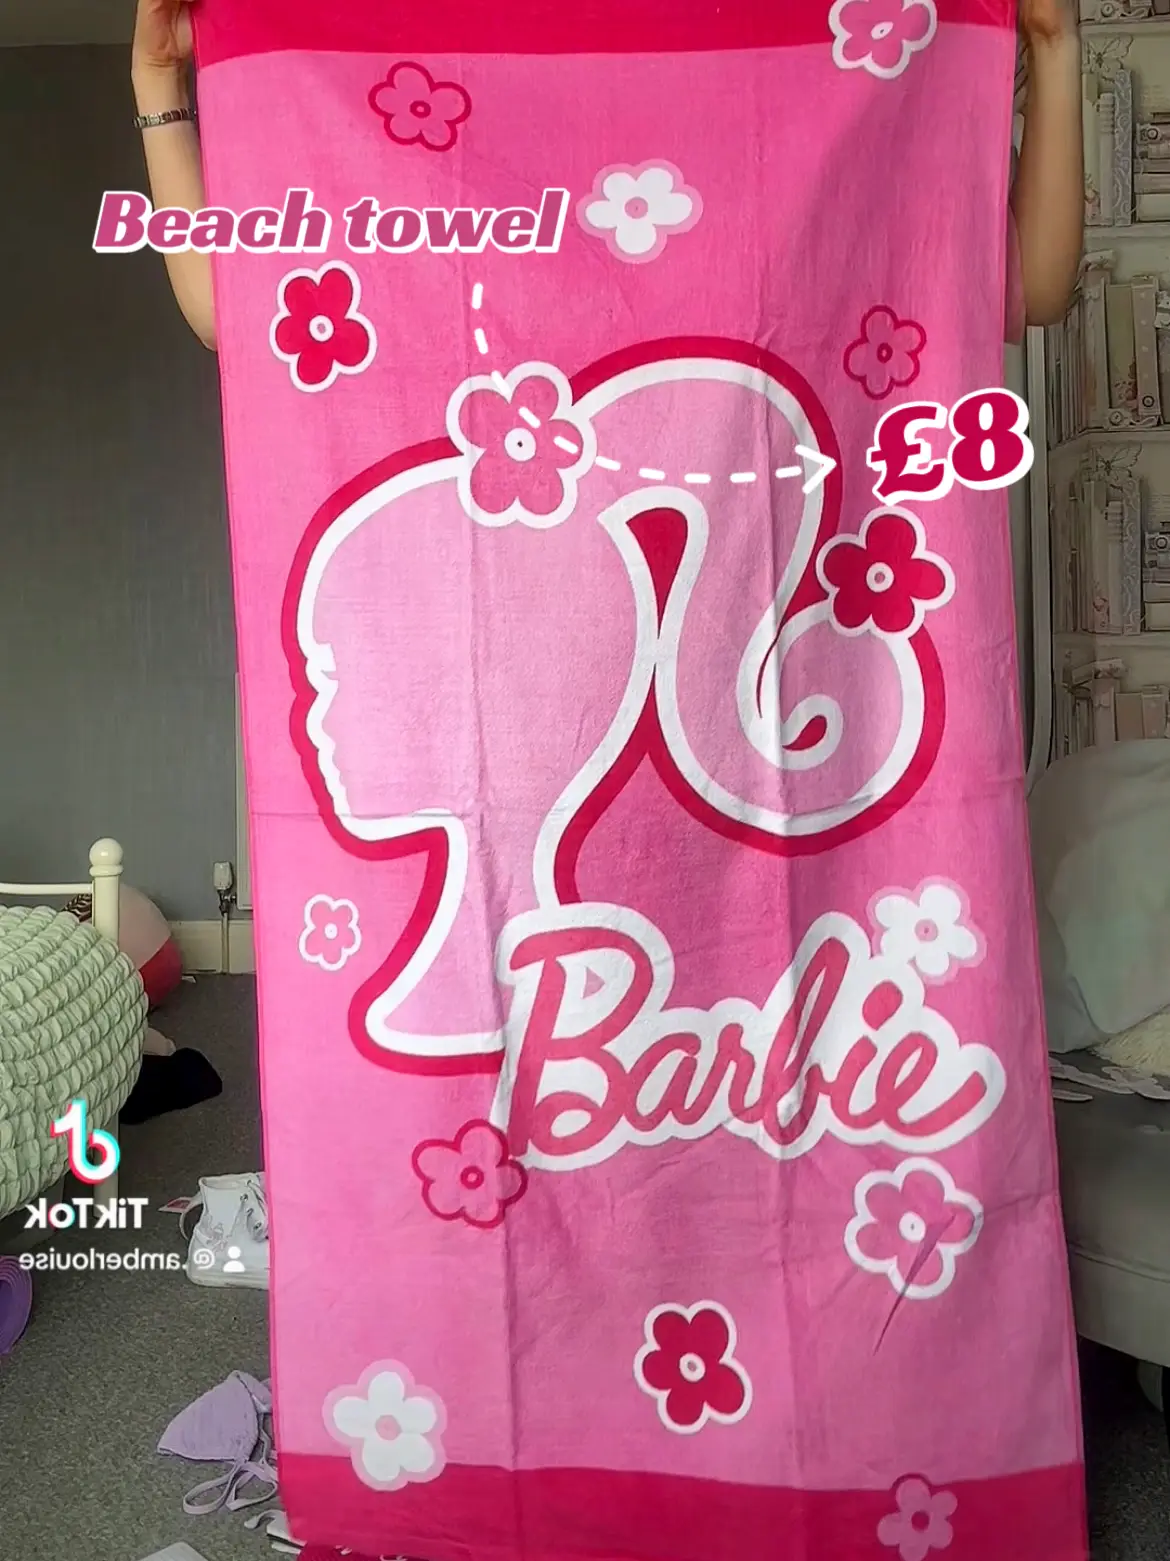 Barbie corset just arrived in store £12 💗💙 #primark